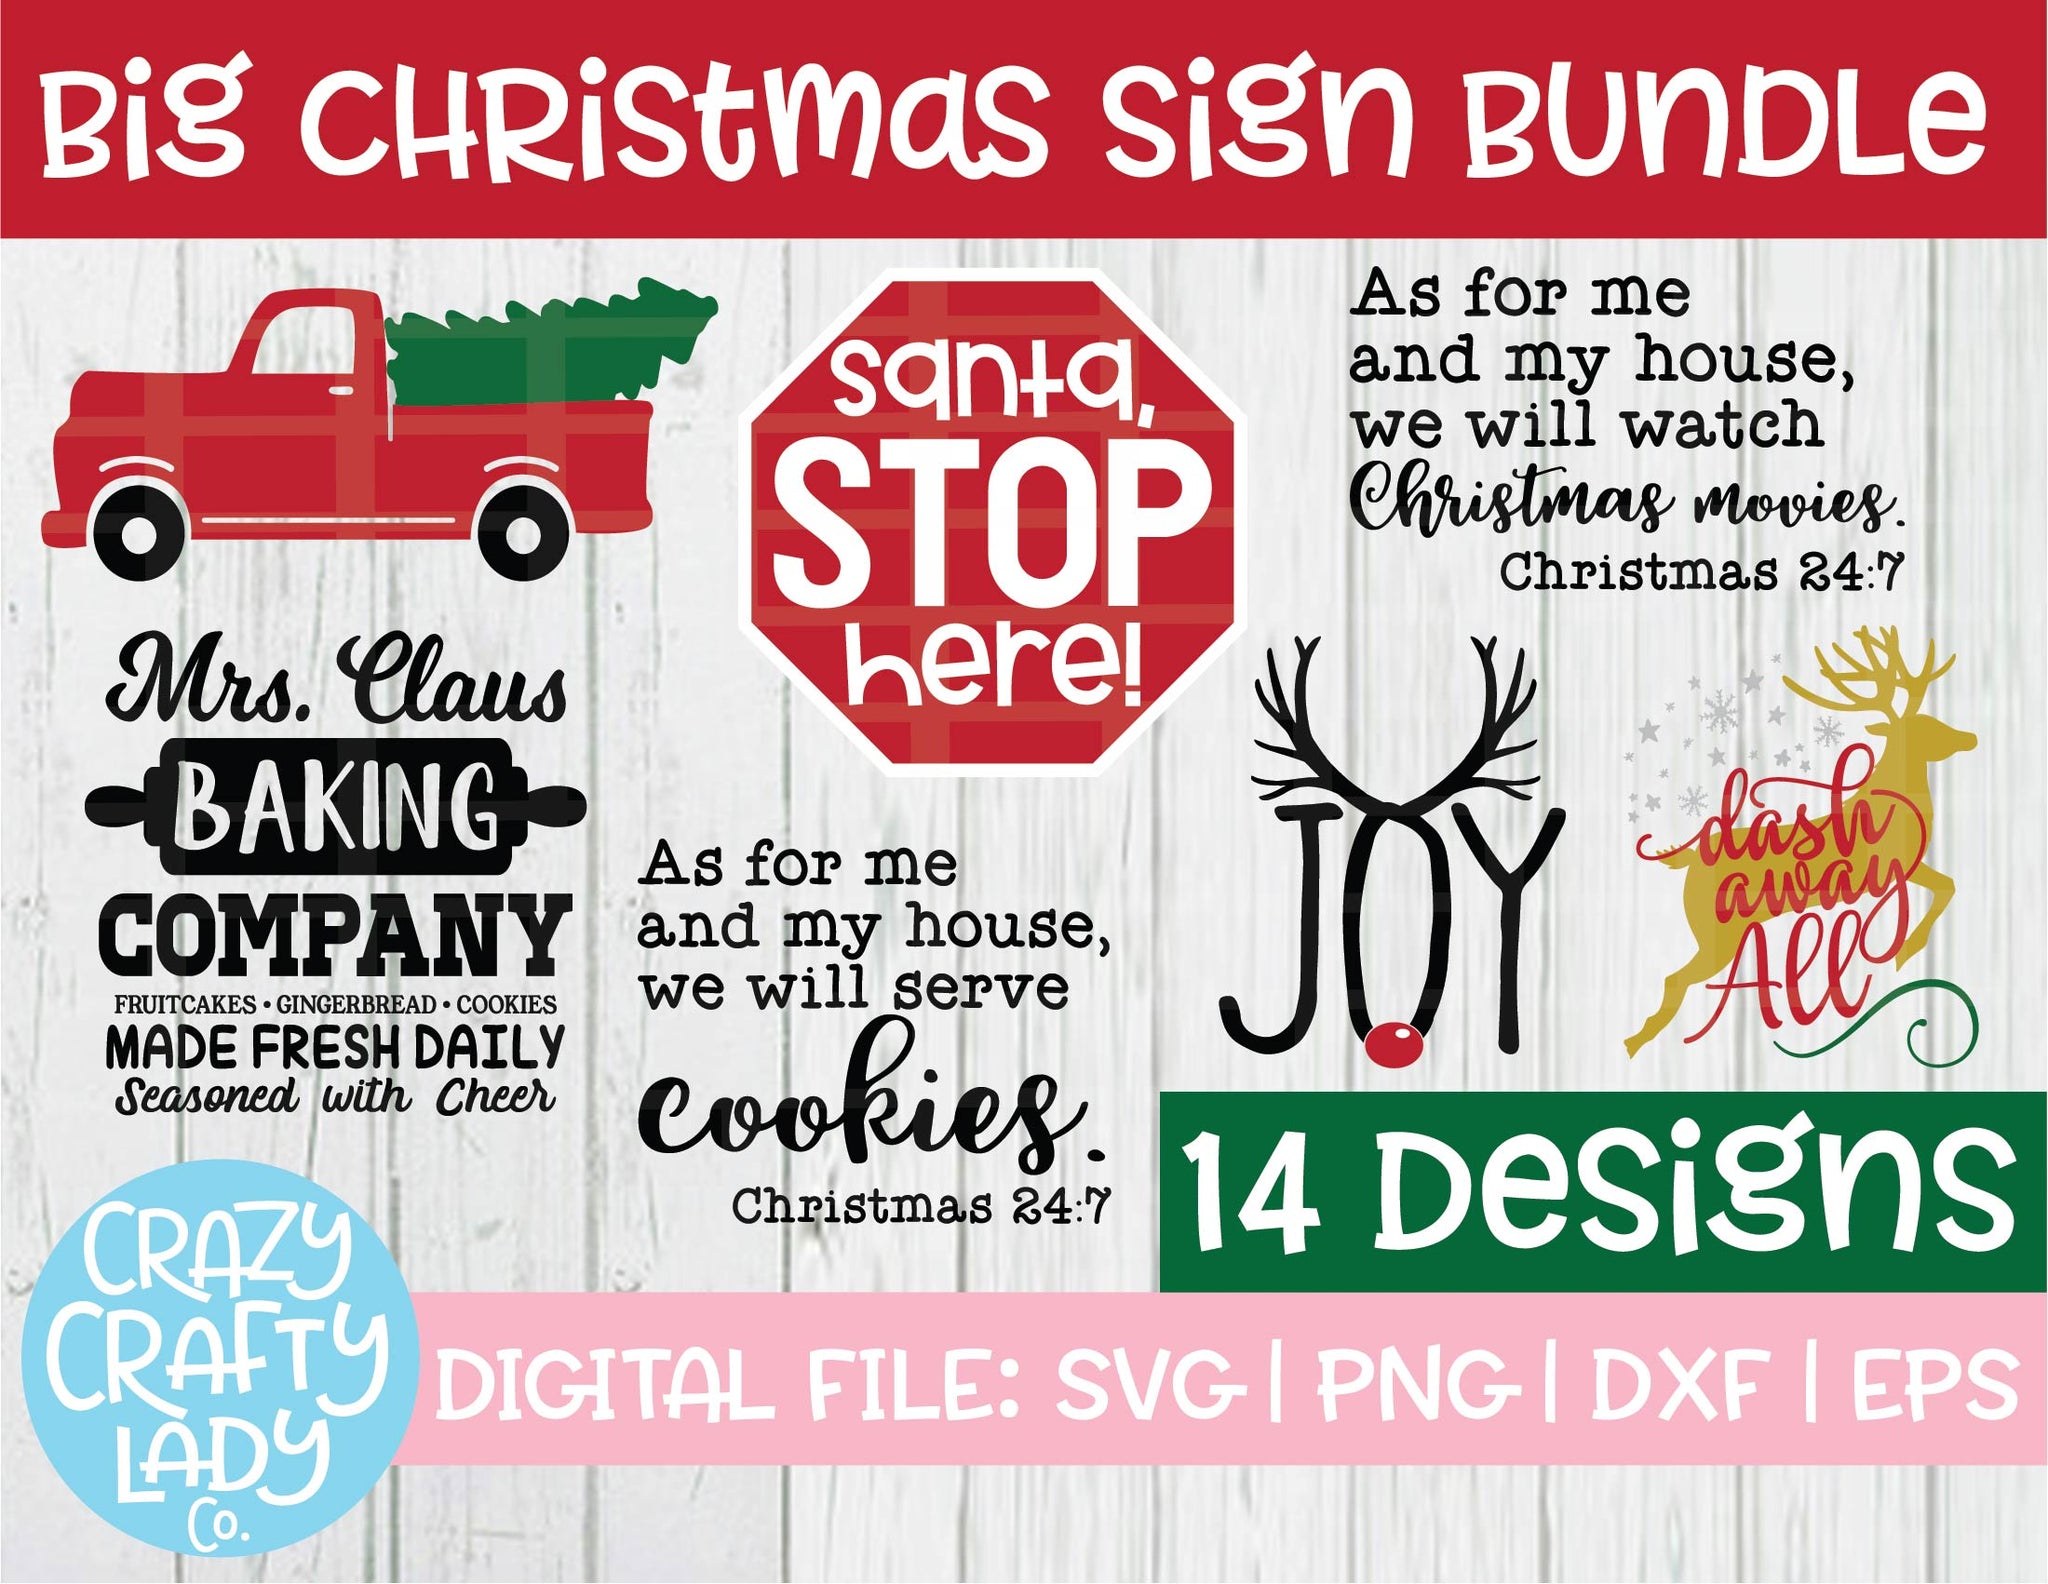 Download Big Christmas Sign Svg Cut File Bundle Crazy Crafty Lady Co